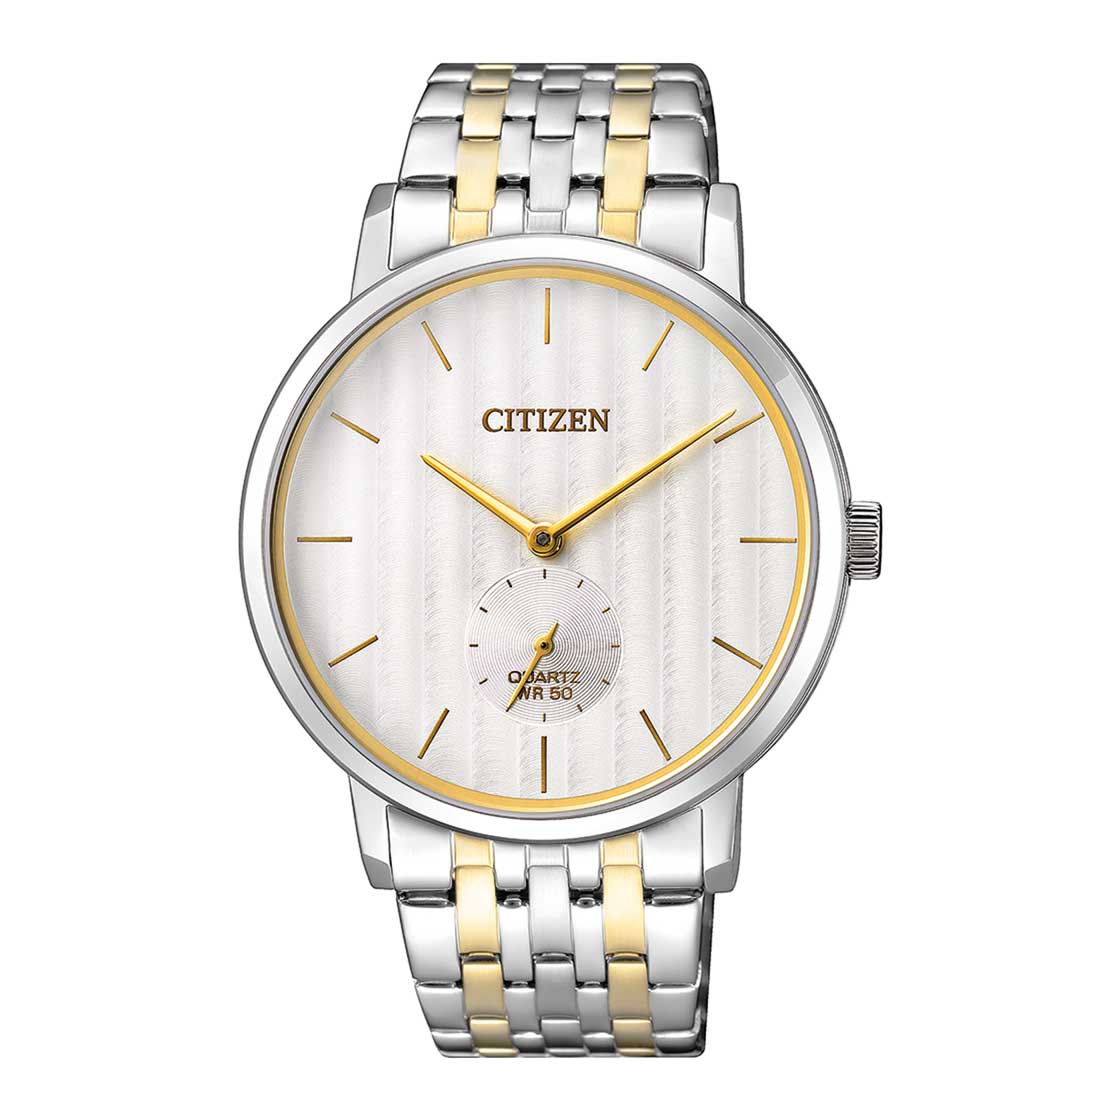 Citizen Men's Quartz Watch with Gold Dial - BE9174-55A